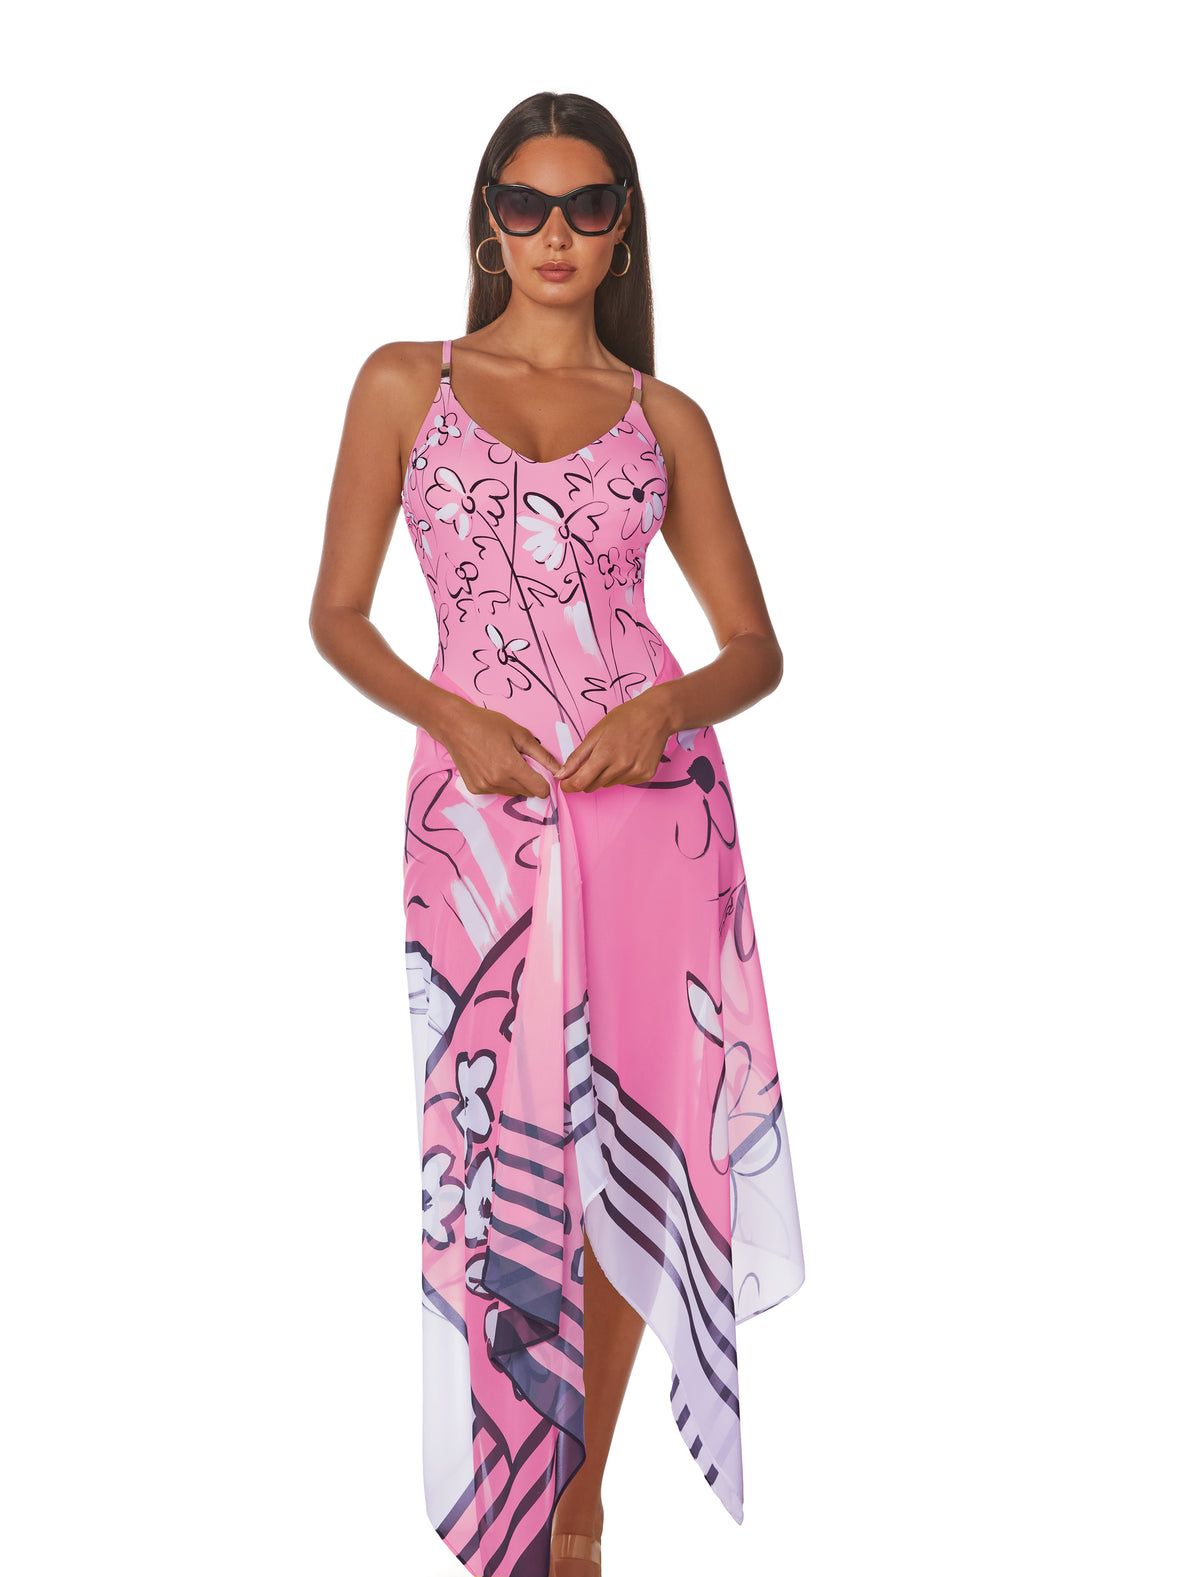 Miranda Venice Pink Swimsuit